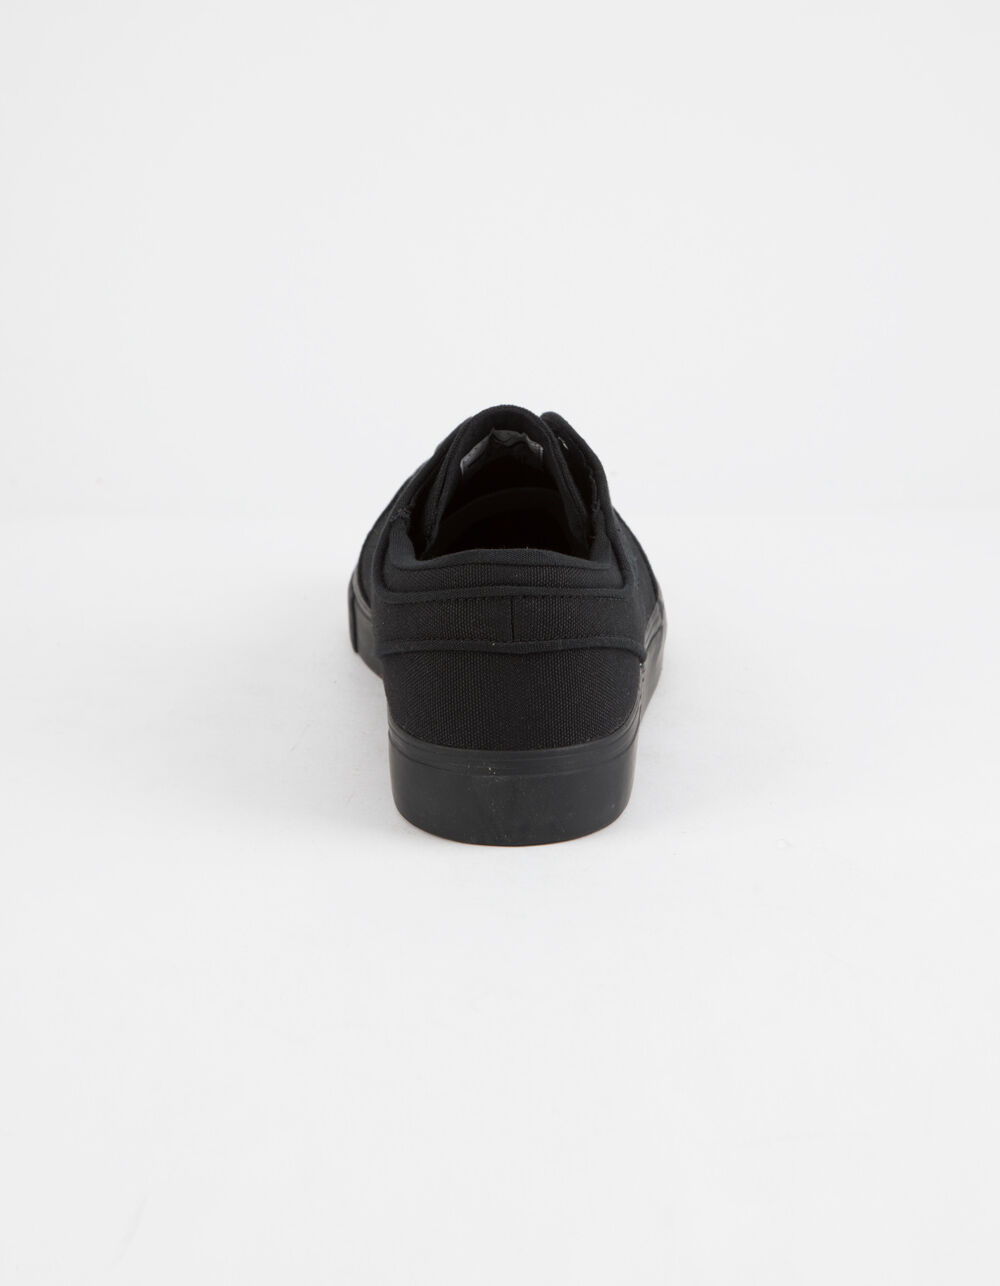 NIKE SB Zoom Stefan Janoski Canvas Black & Black Shoes - BLACK/BLACK ...